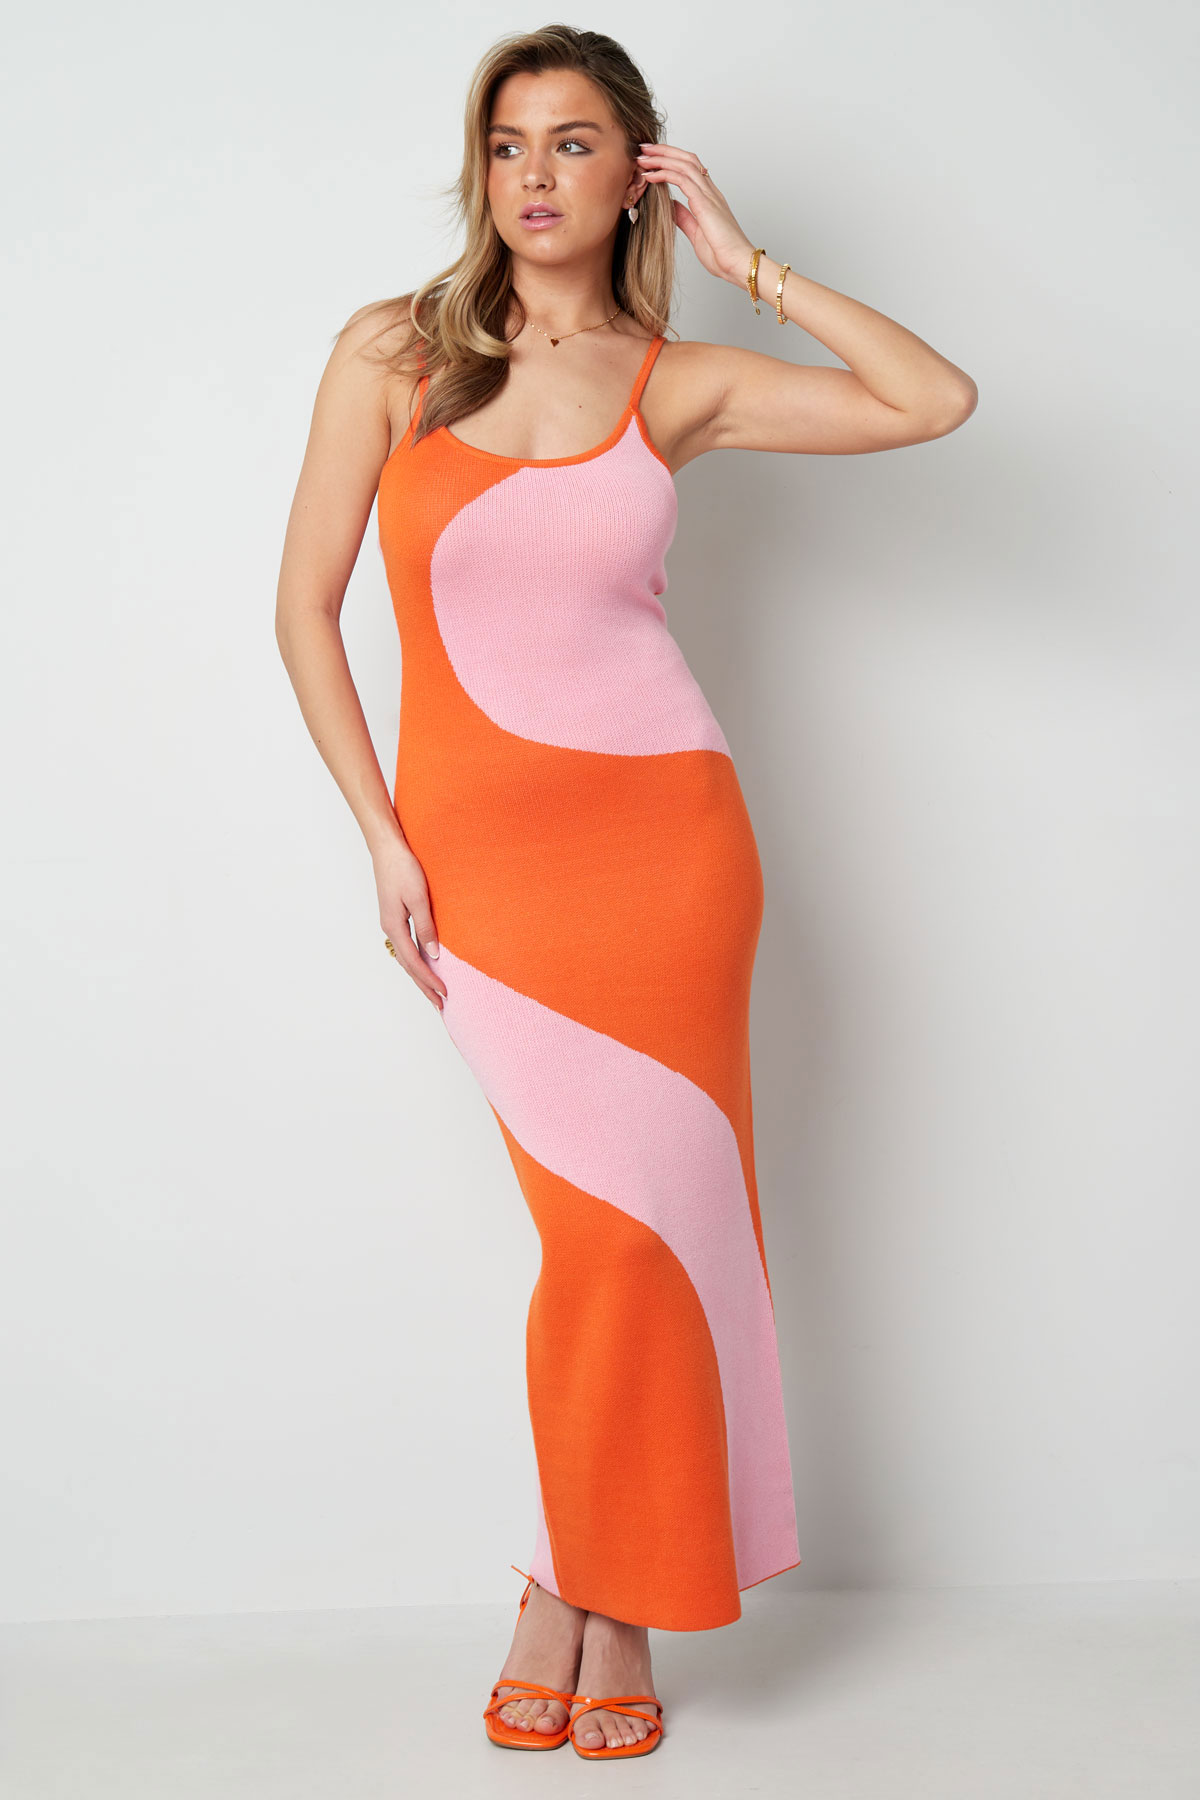 Vestido estampado orgánico - rosa naranja h5 Imagen2